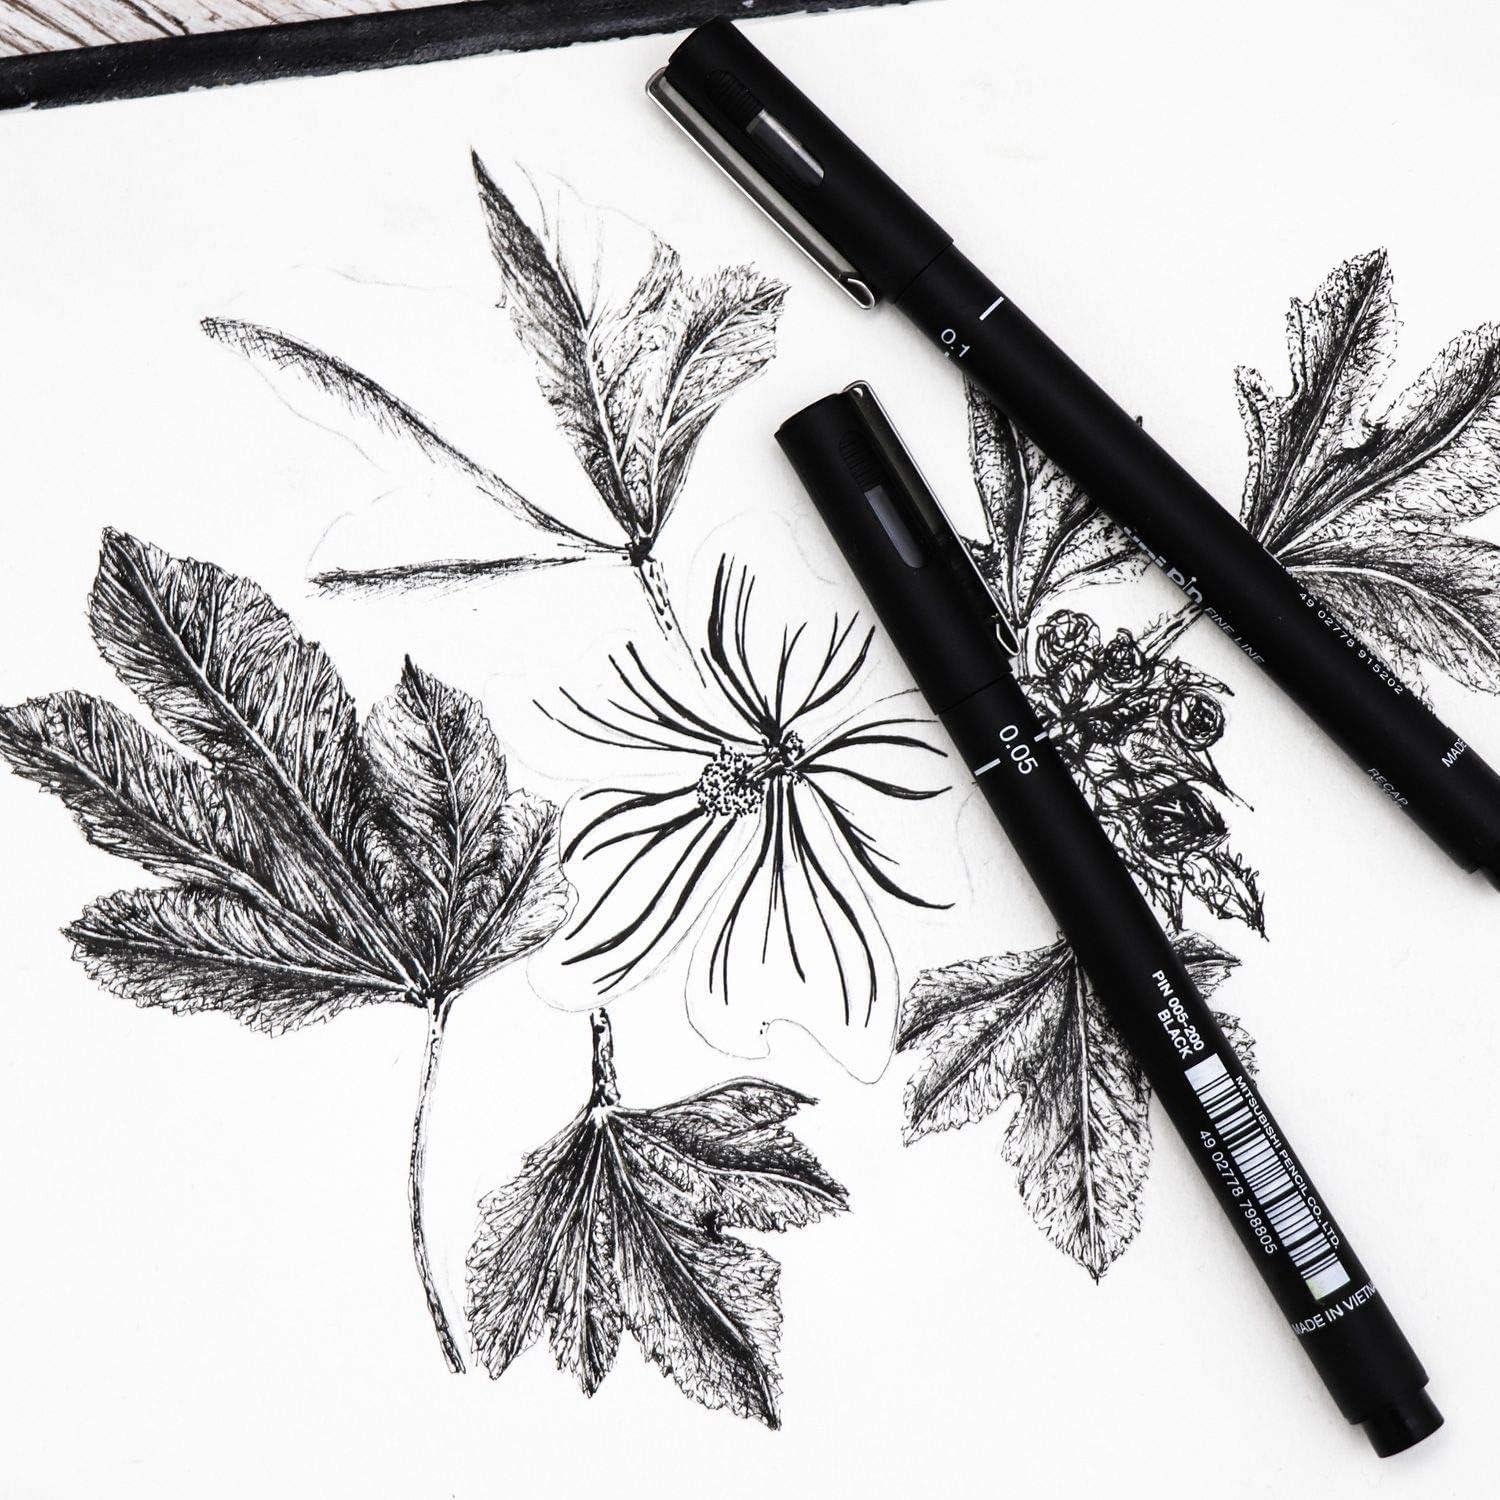 Uni Pin Fineliner Drawing Pen - 9 Grades - Black Ink